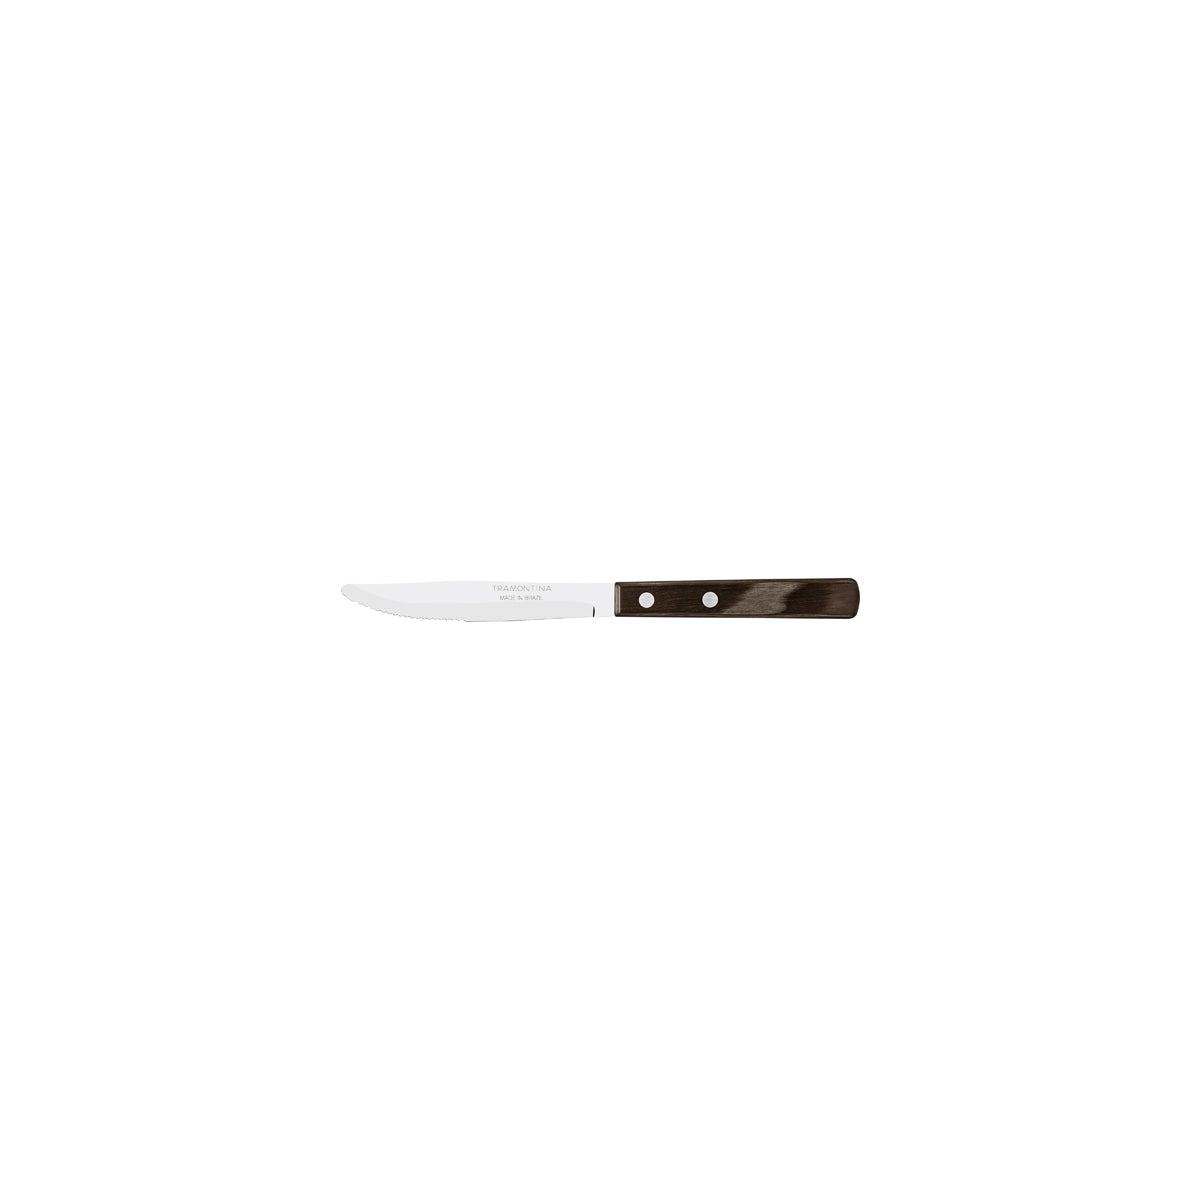 TM21101/494 Tramontina Churrasco Steak Knife Serrated Narrow Blade with Polywood Handle Brown 102mm Tomkin Australia Hospitality Supplies